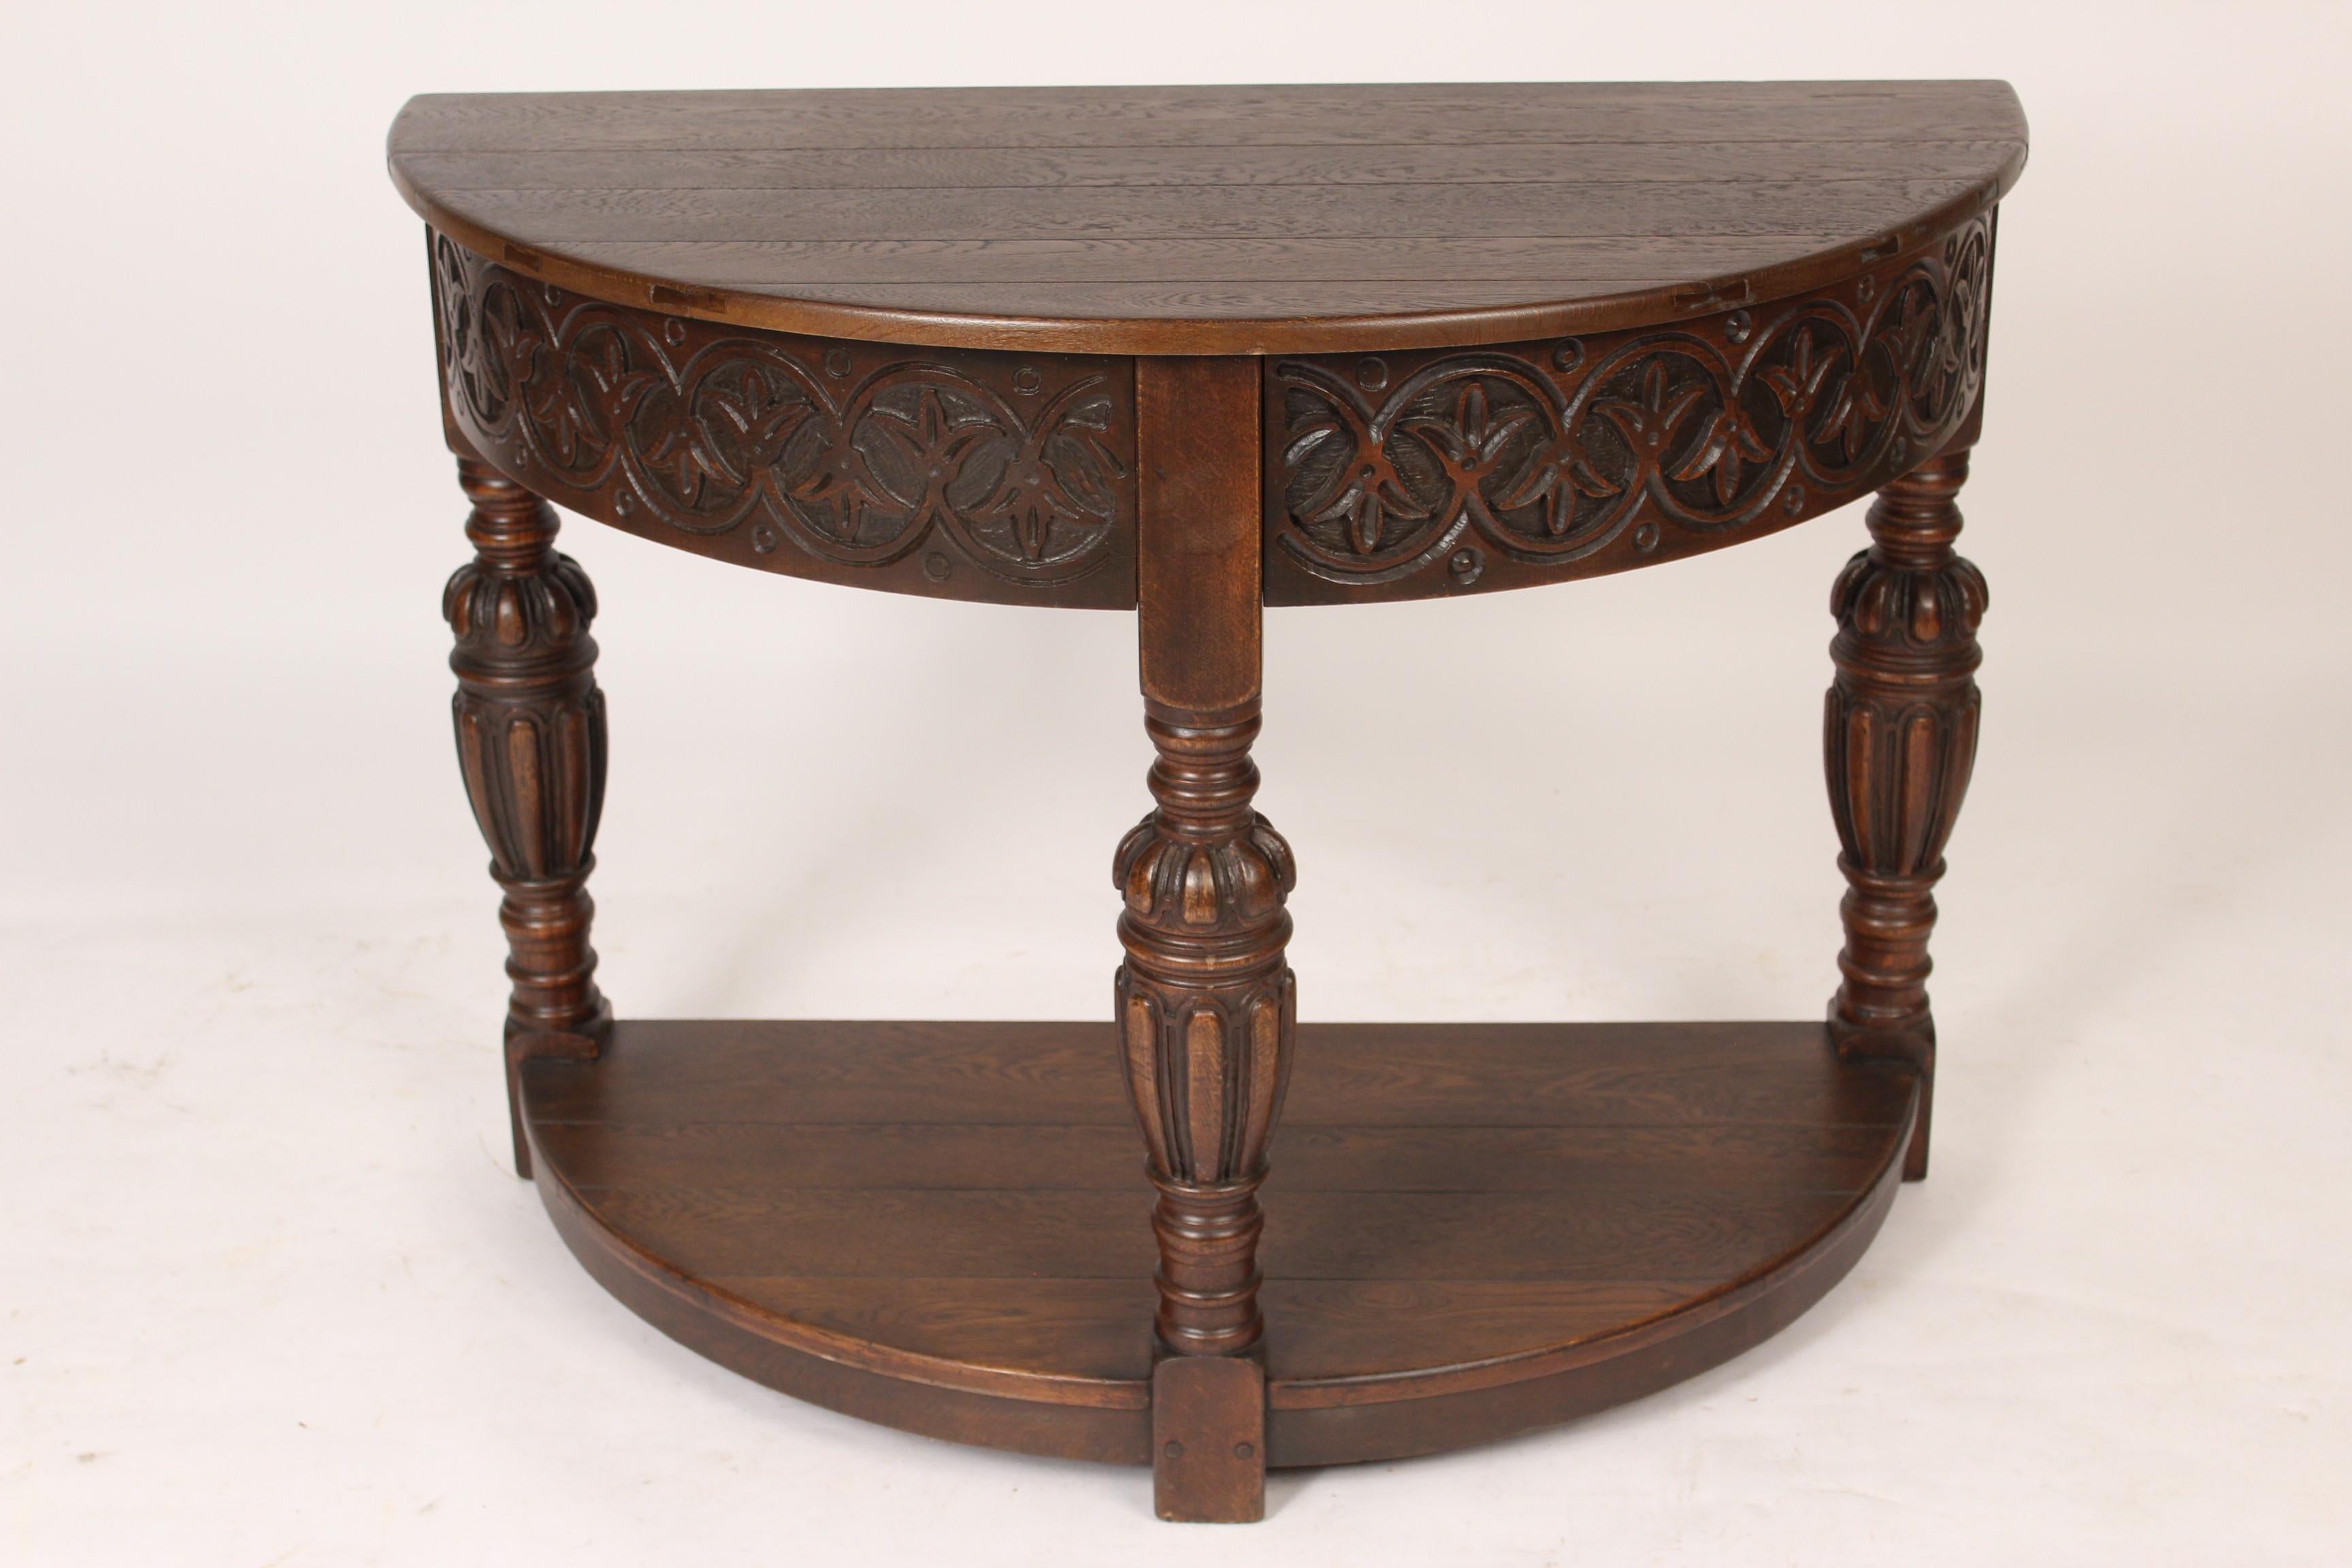 Spanish revival carved oak demilune console table, circa 1930s.